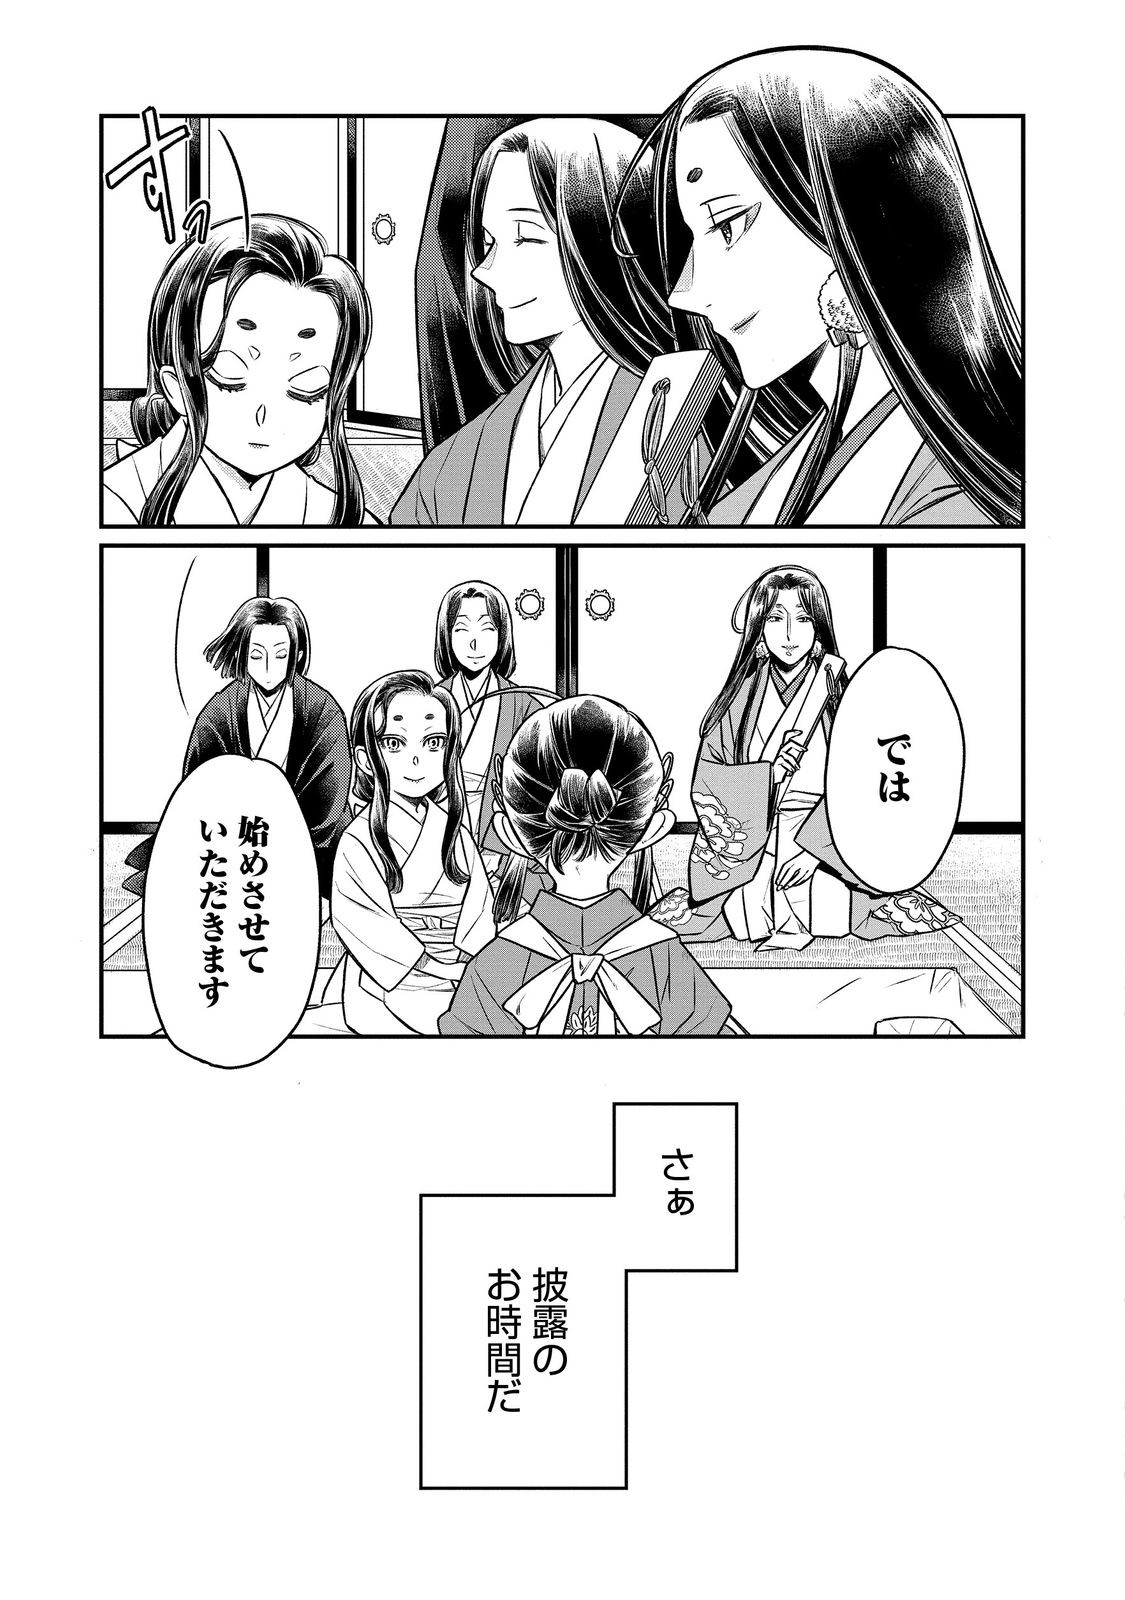 Kitanomandokoro-sama no Okeshougakari - Chapter 10.1 - Page 3